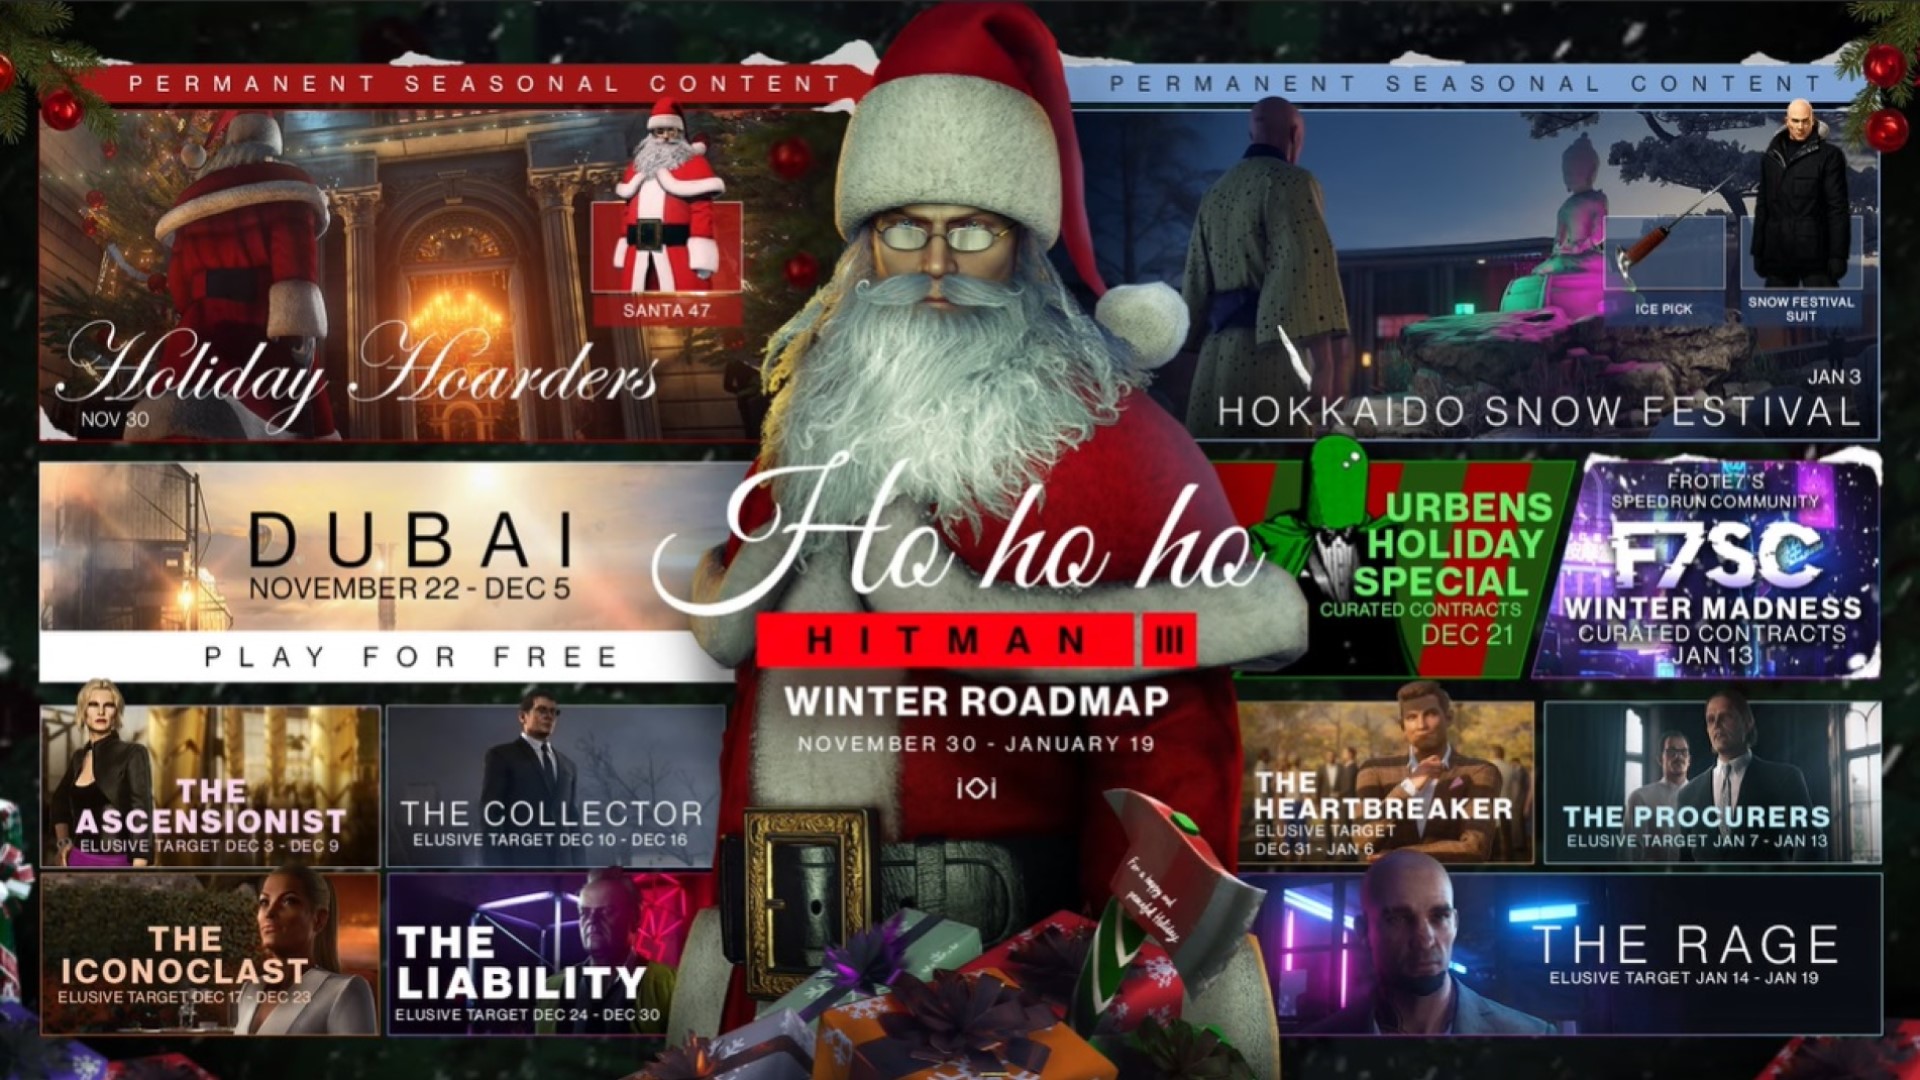 Hitman 3 Winter Roadmap Includes New Seasonal Content, Returning